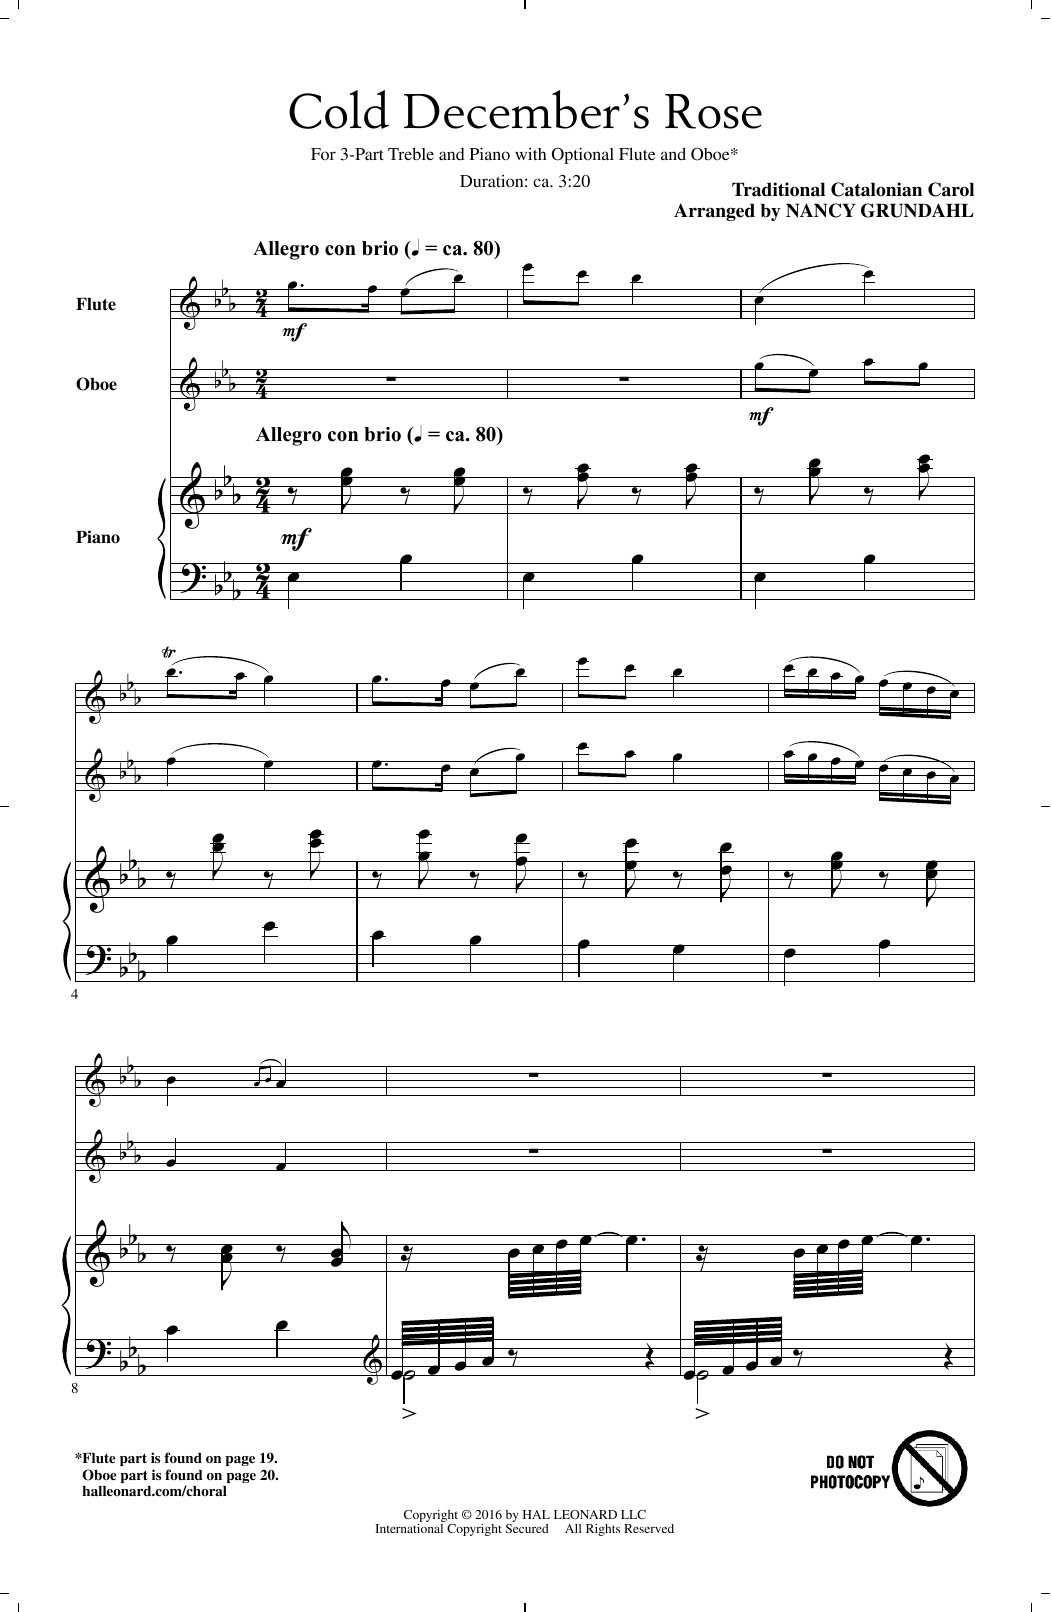 Traditional Carol Cold December's Rose (arr. Nancy Grundahl) Sheet Music Notes & Chords for 3-Part Treble - Download or Print PDF